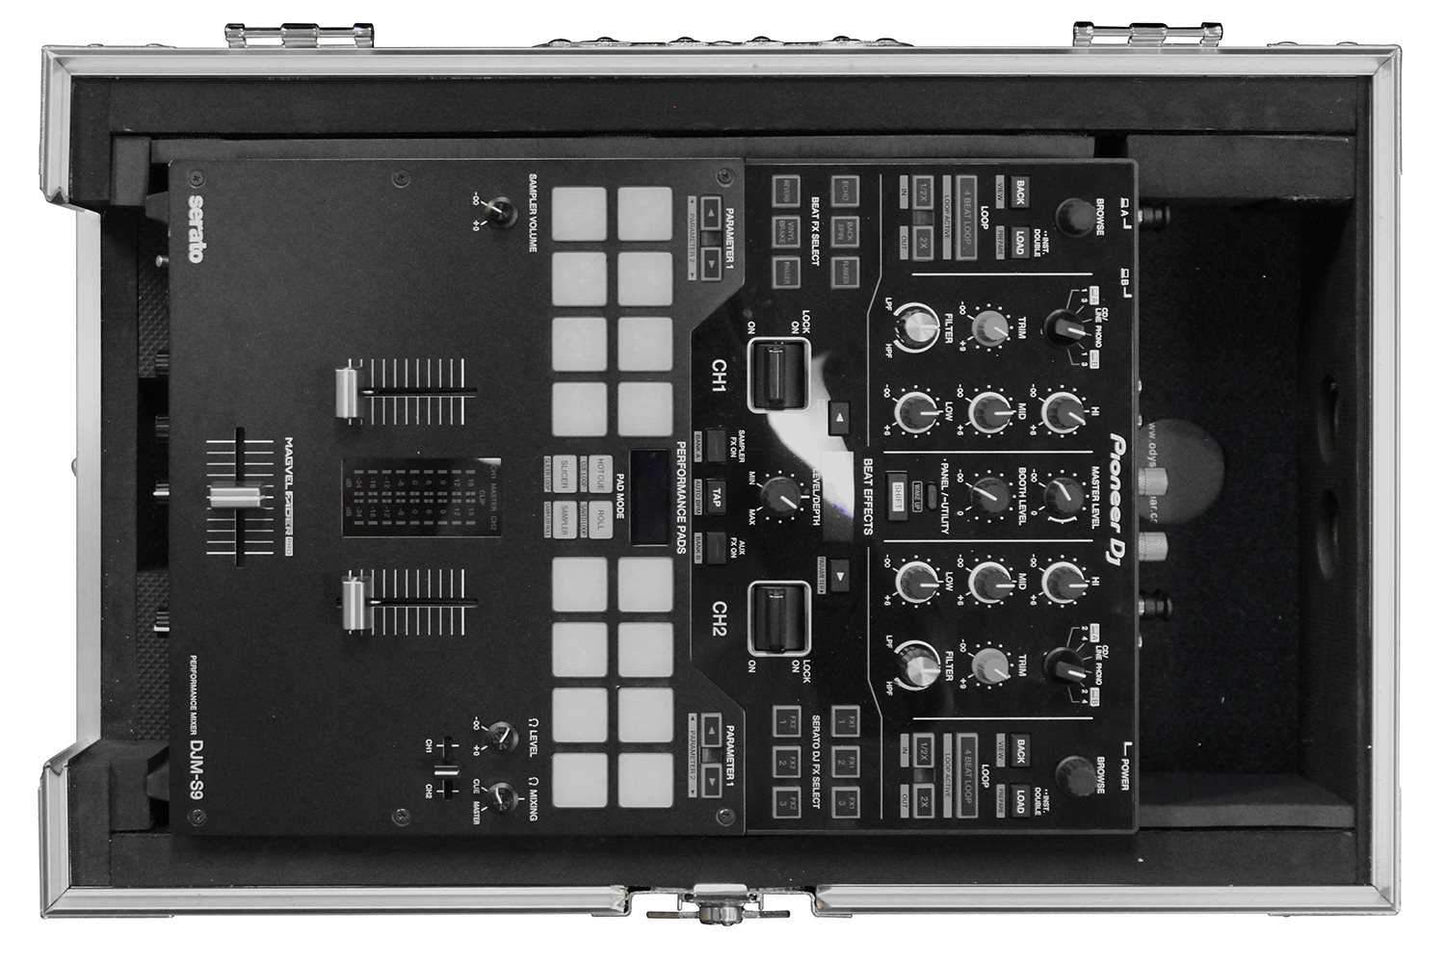 Odyssey FZ10MIXXD Universal 10-Inch DJ Mixer Case - ProSound and Stage Lighting